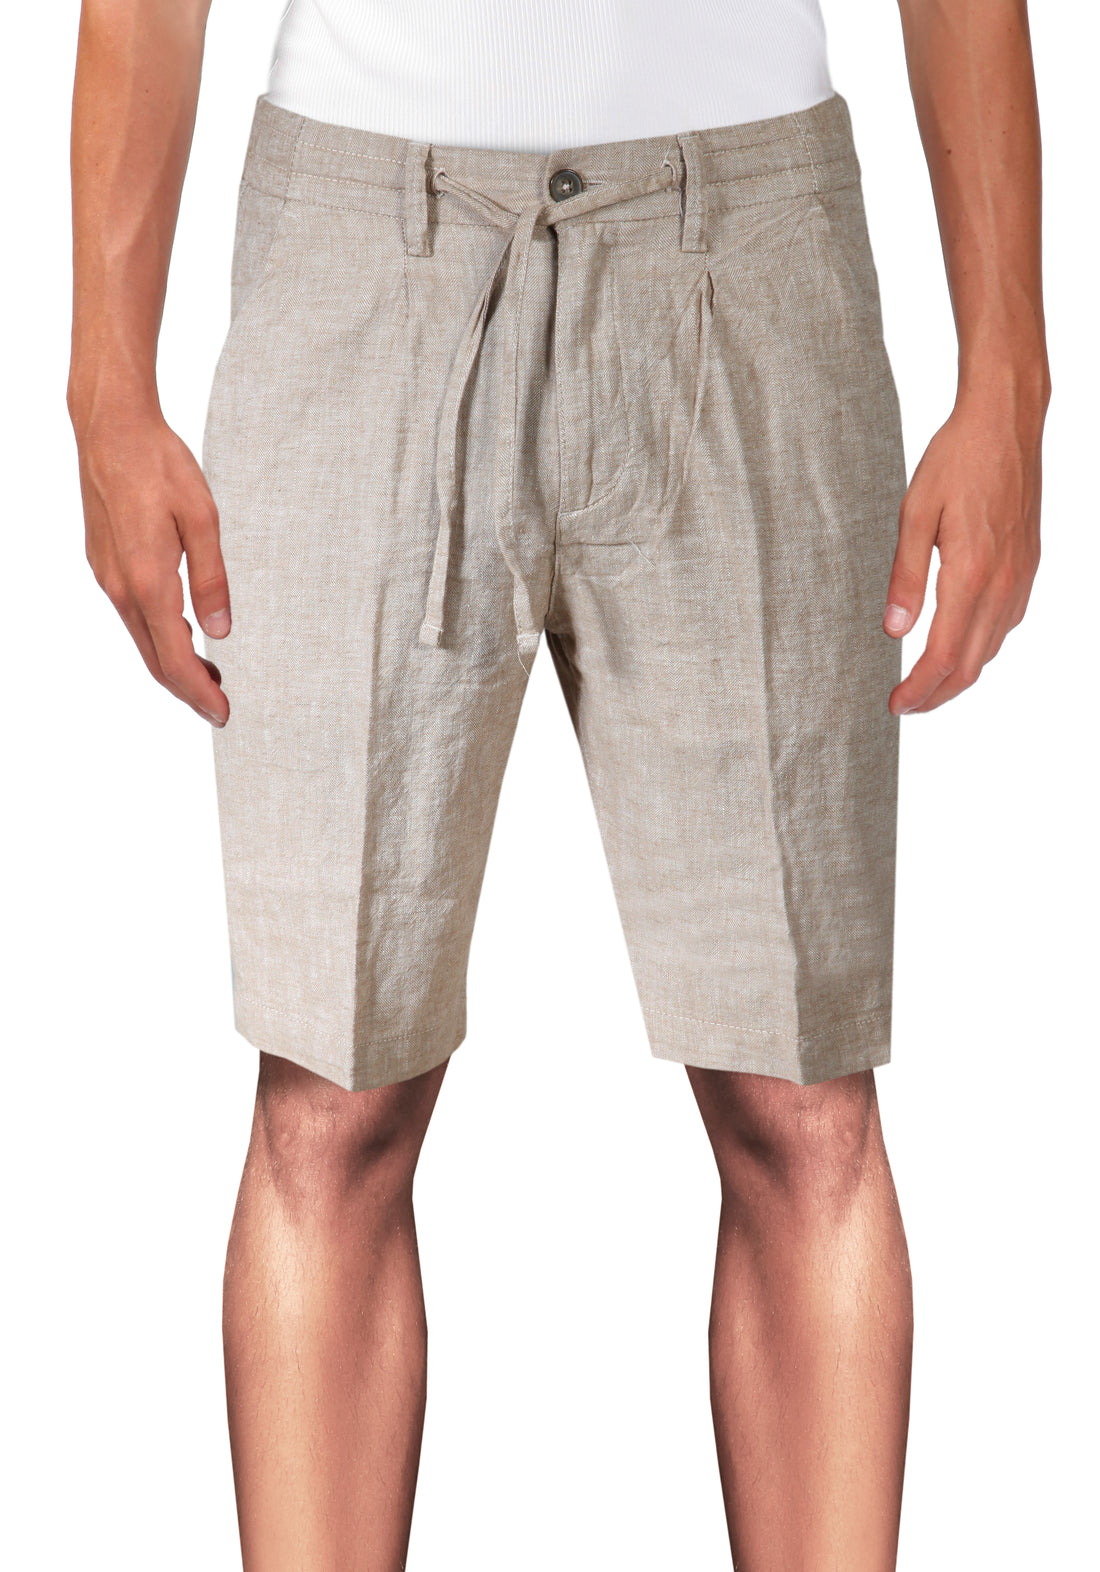 Bermuda shorts with drawstring in Linen - Beige